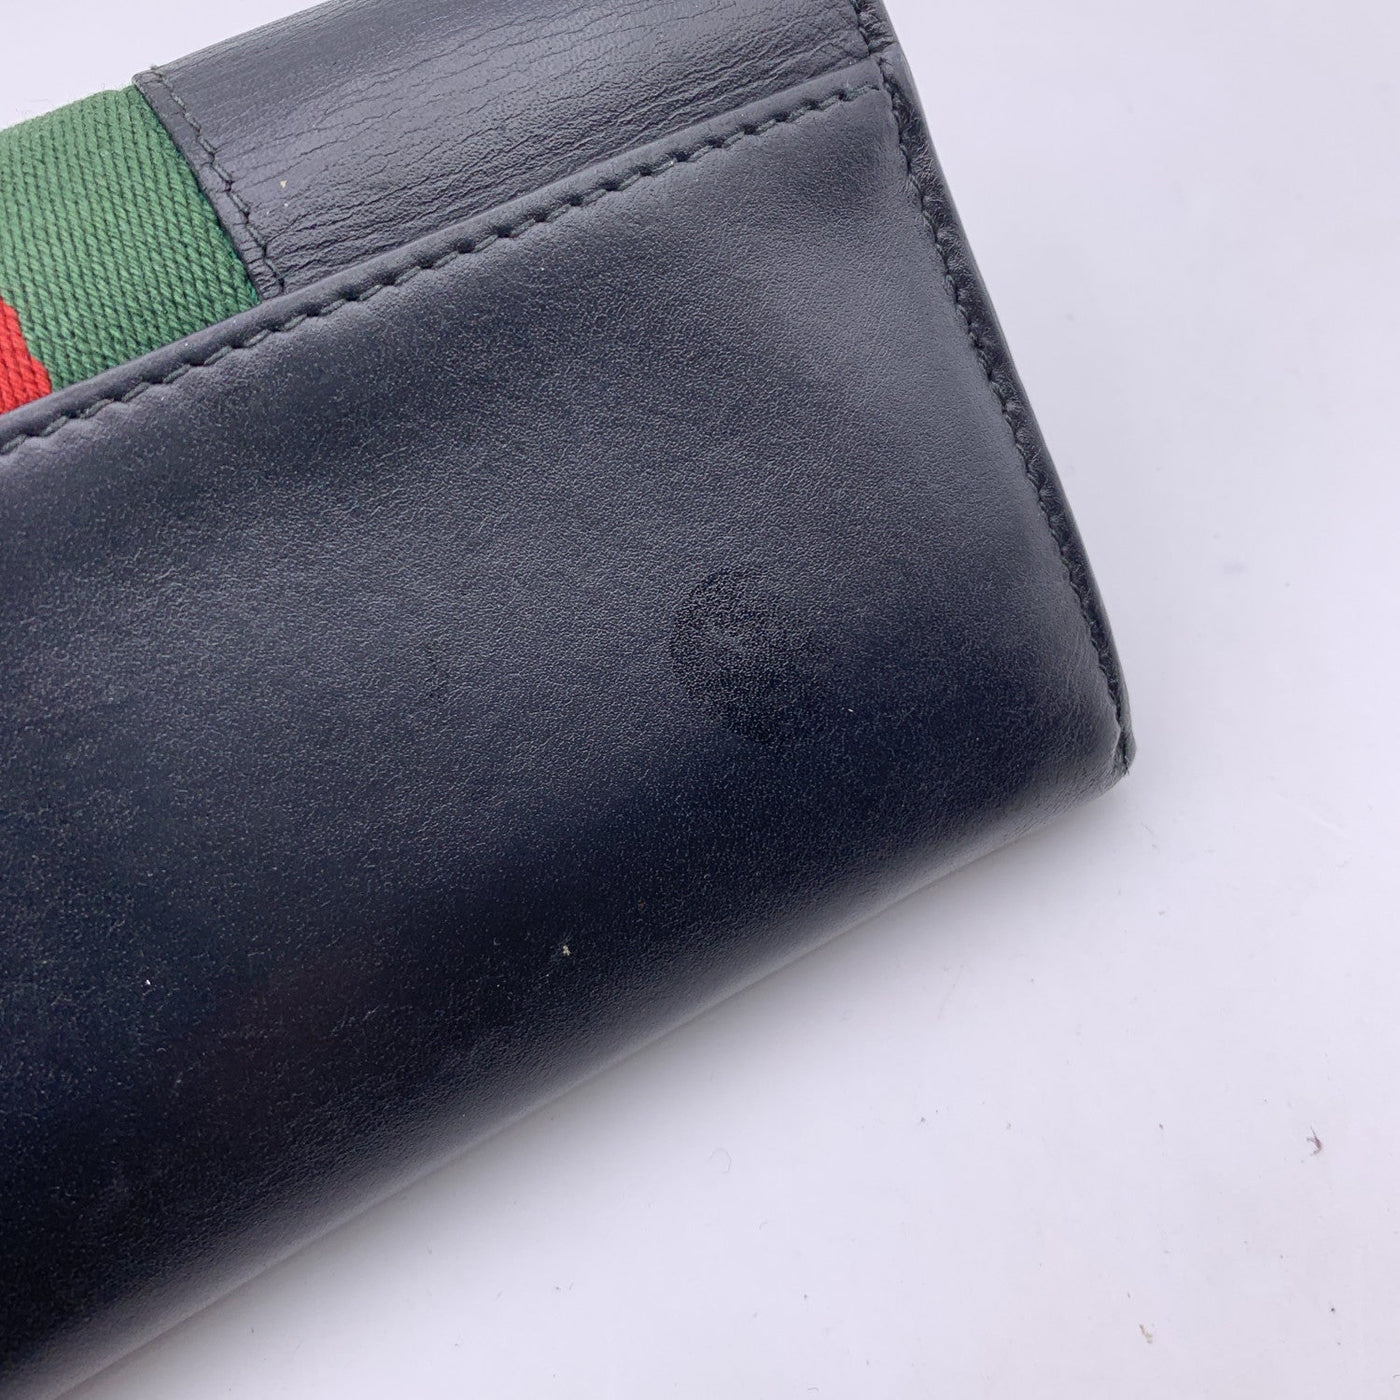 Gucci Long Continental Vintage Wallet